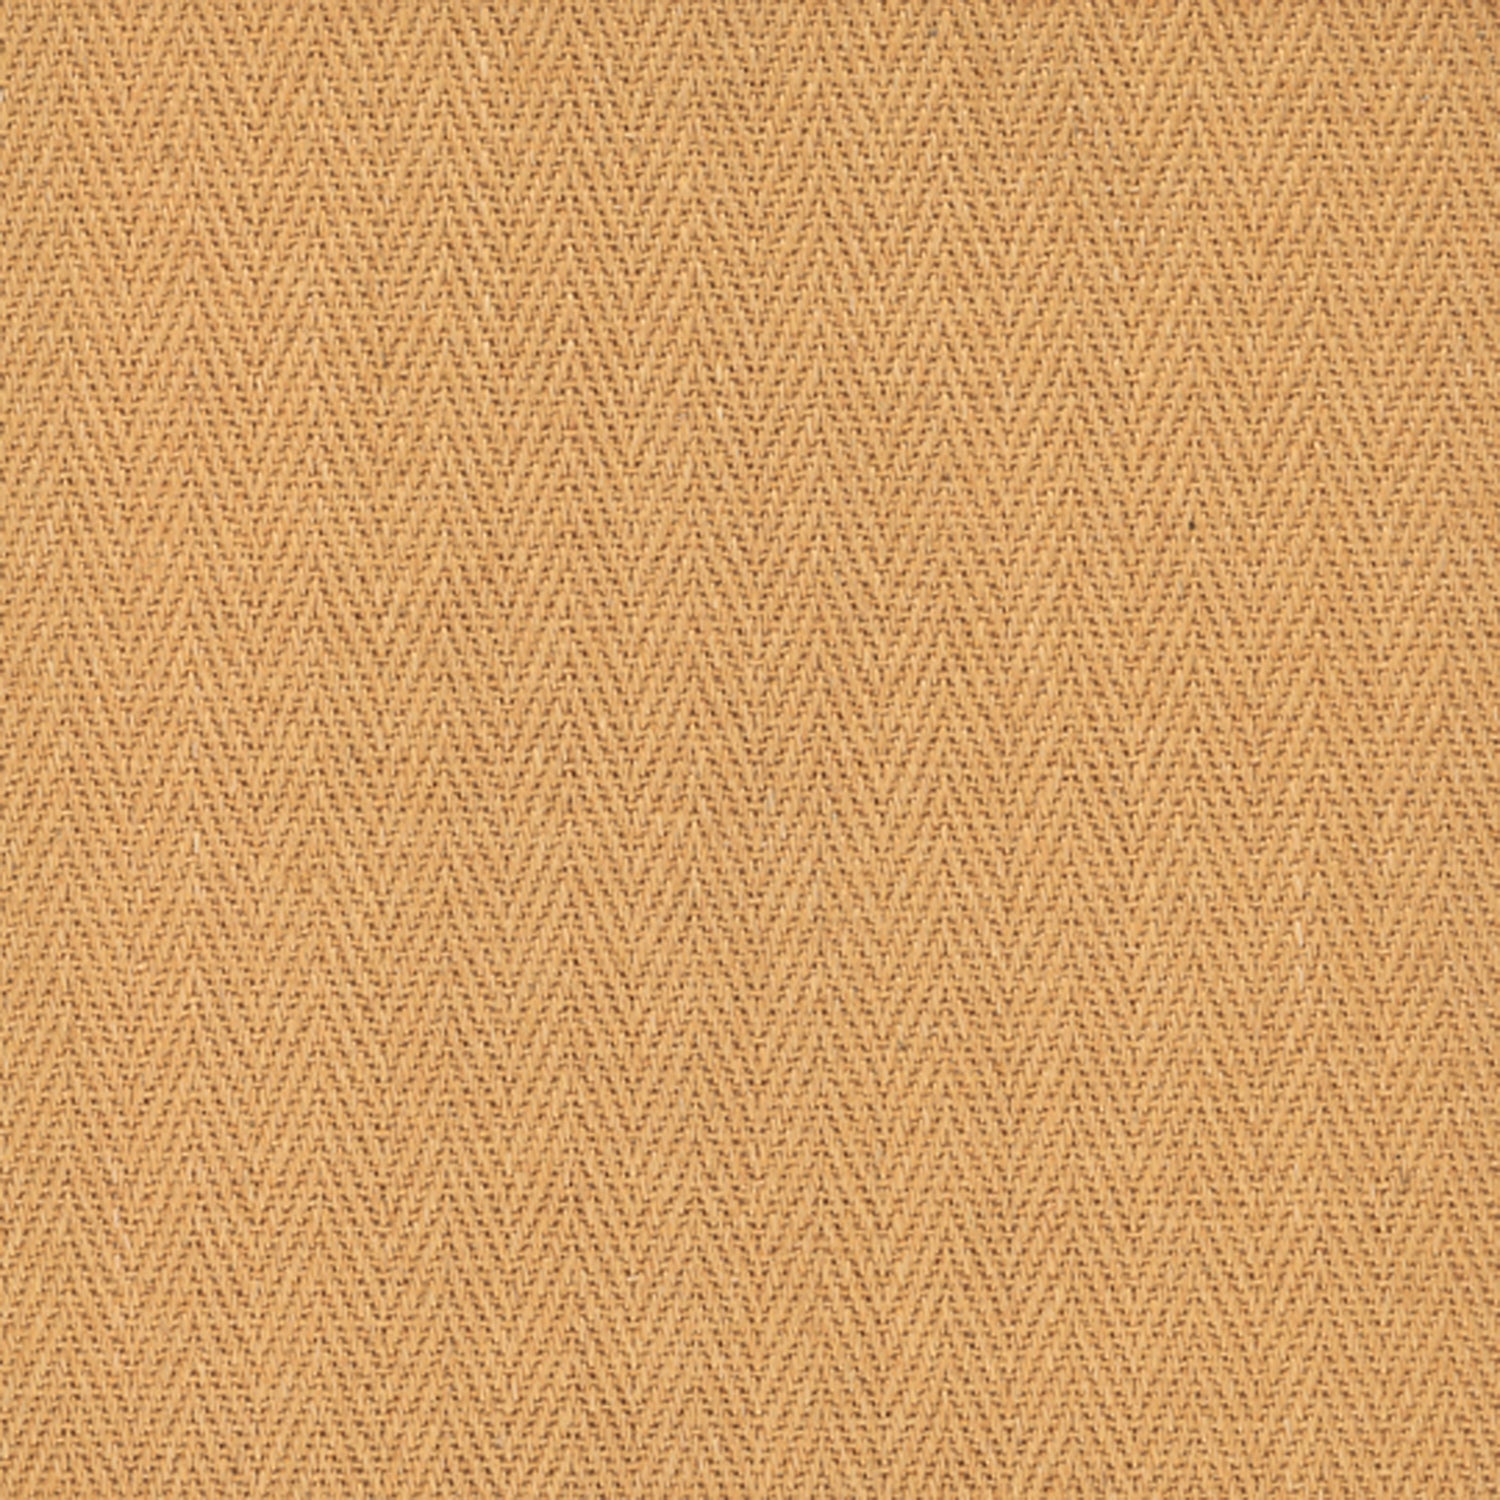 Sisal broadloom carpet swatch in a herringbone flat weave in gold.